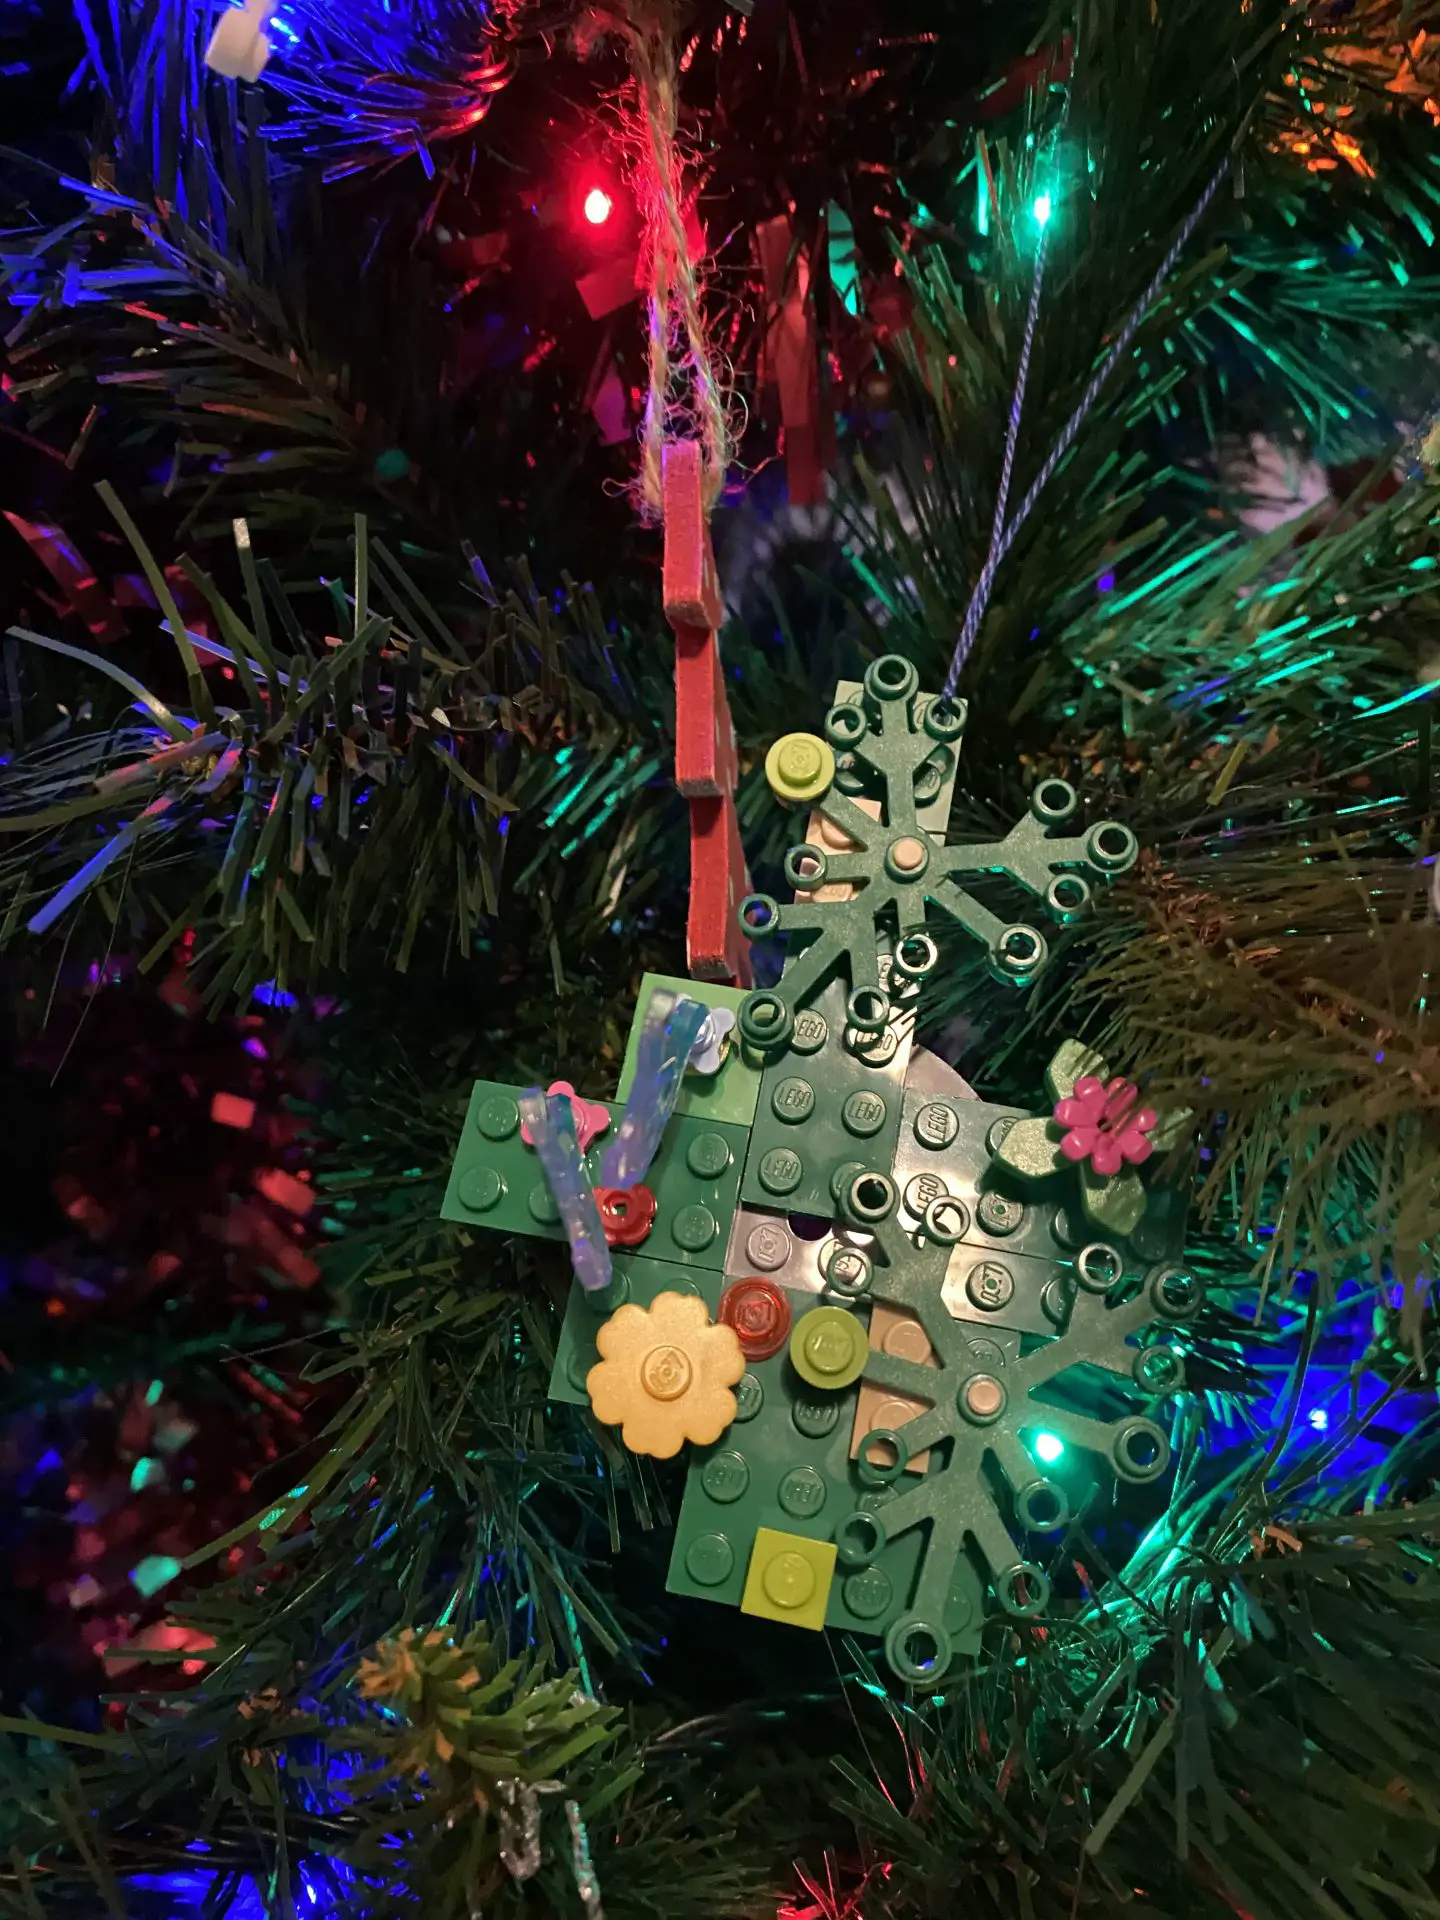 Lego Christmas decorations